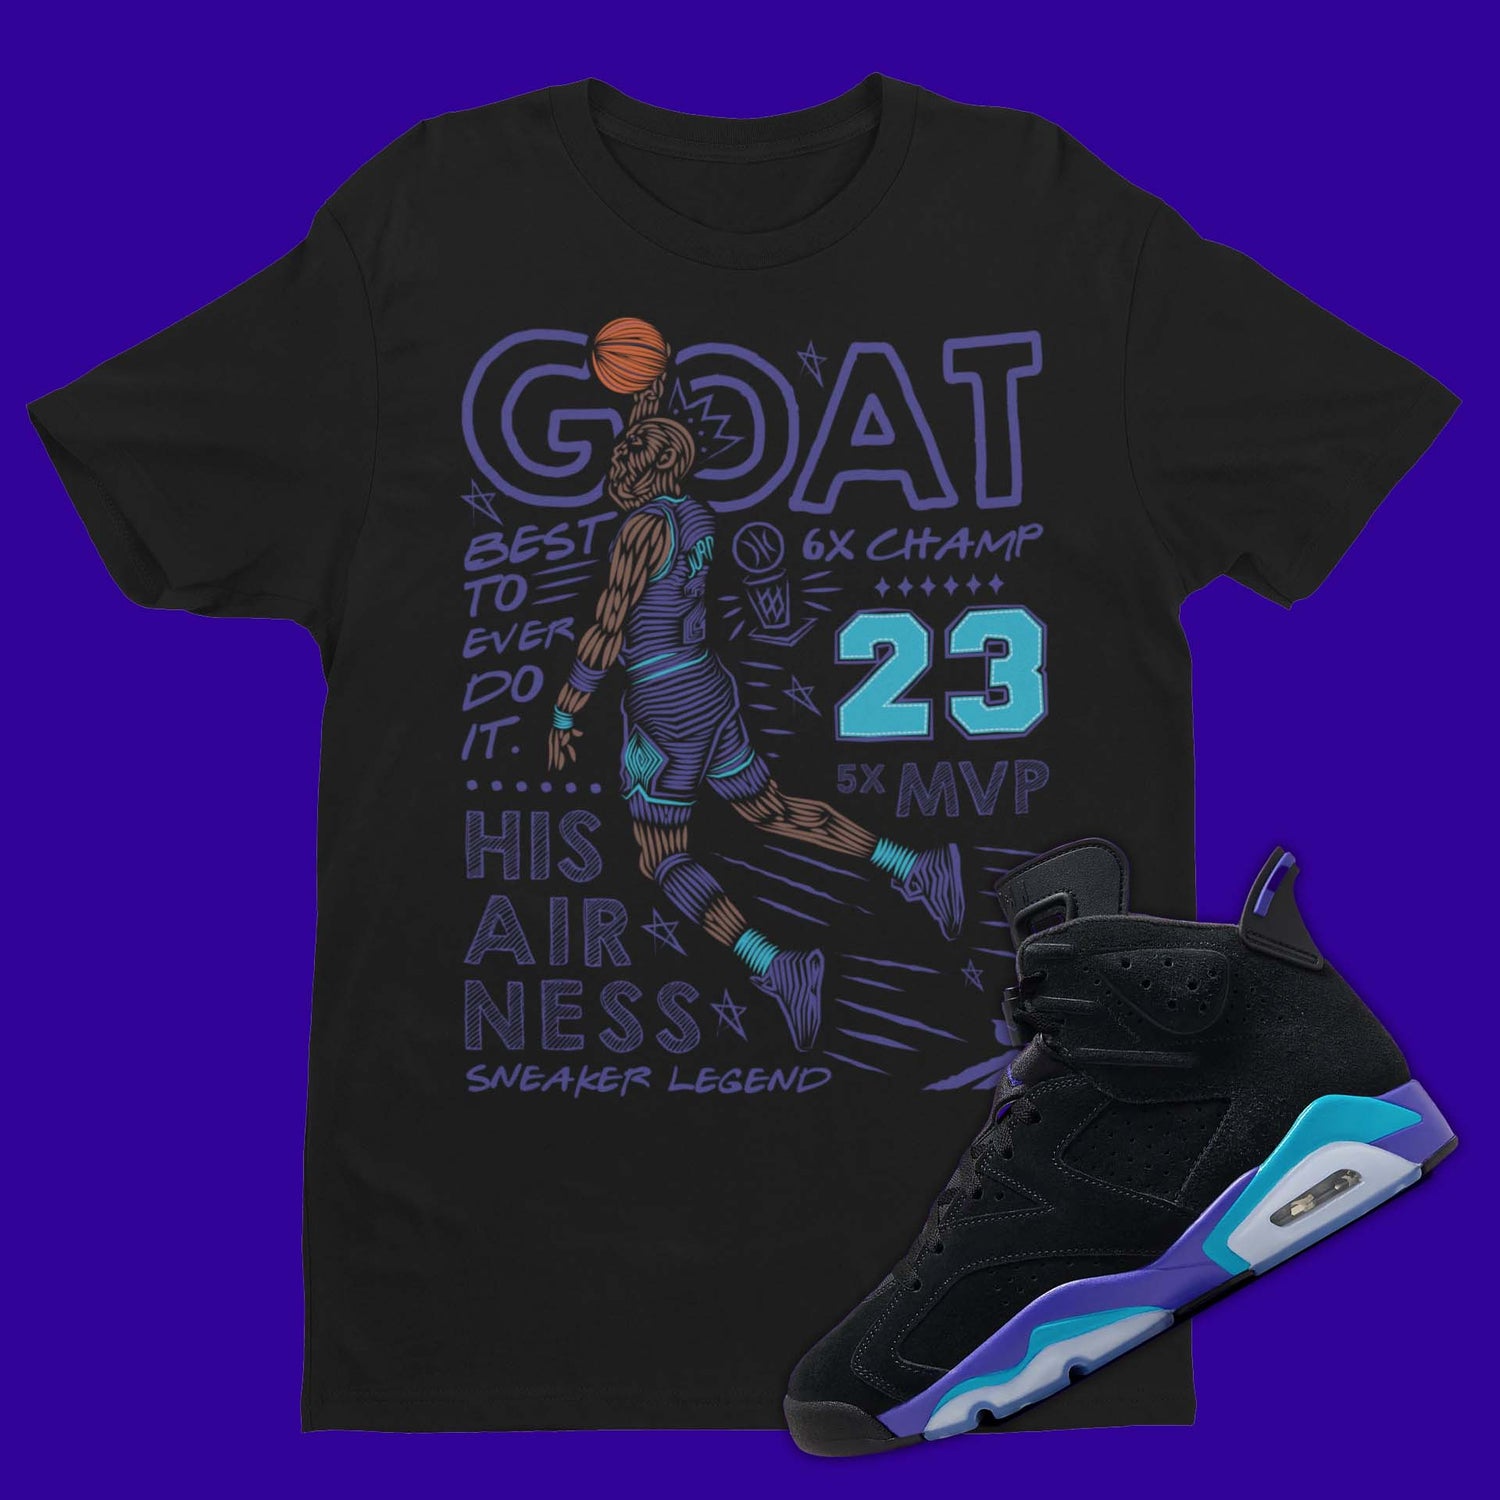 GOAT Air Jordan 6 Aqua Matching T-Shirt from SNKADXGOAT Air Jordan 6 Aqua Matching T-Shirt from SNKADX. Design with Michael Jordan dunking basketball on the front.